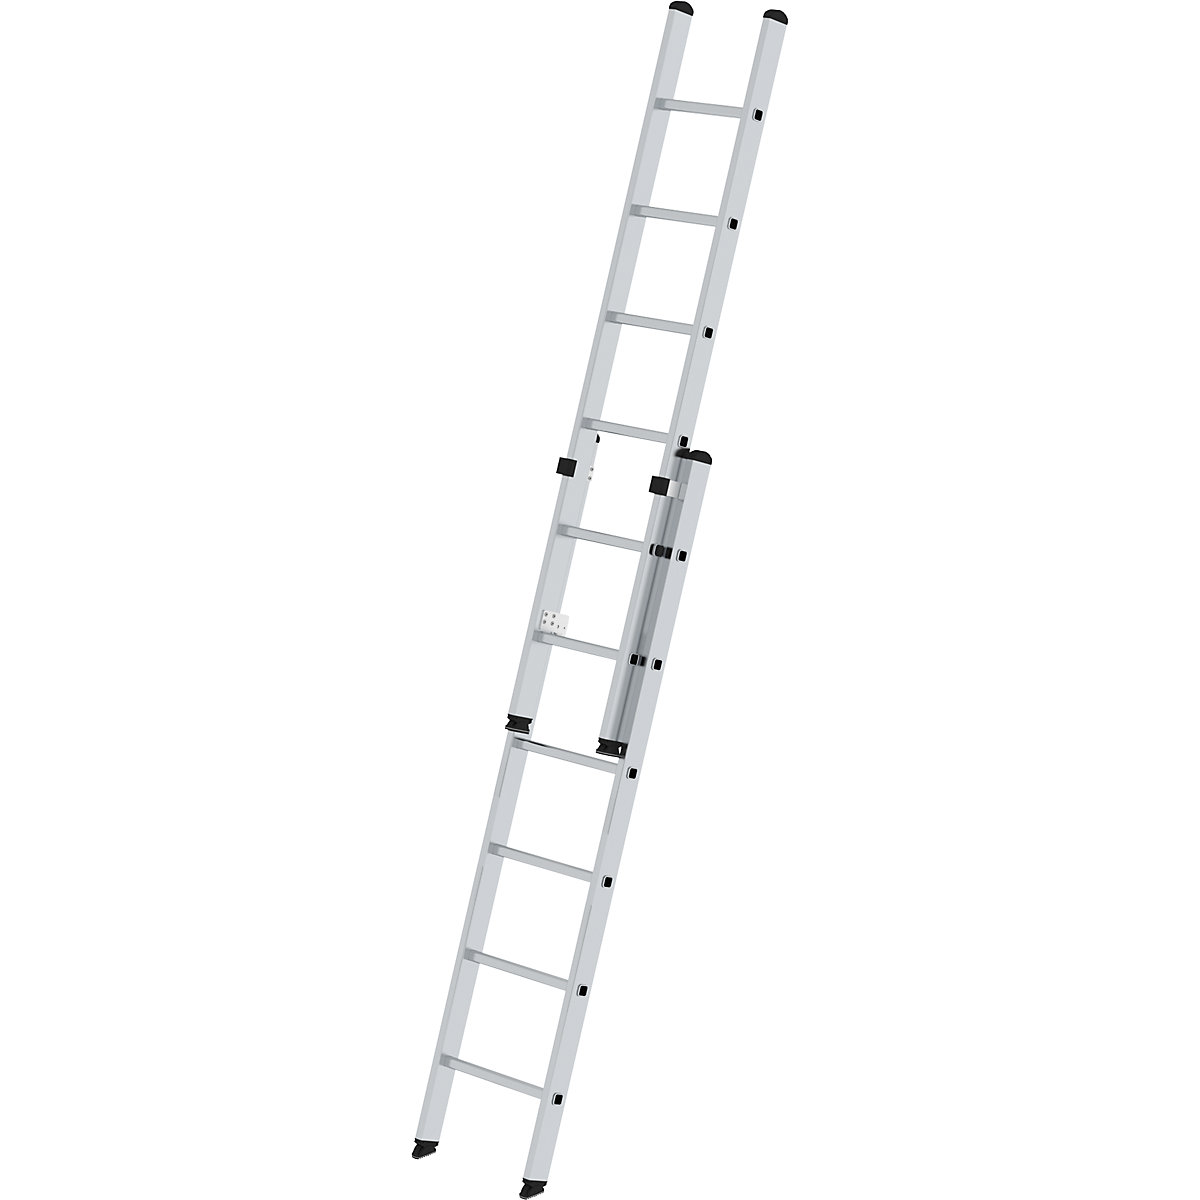 Adjustable Height Ladder